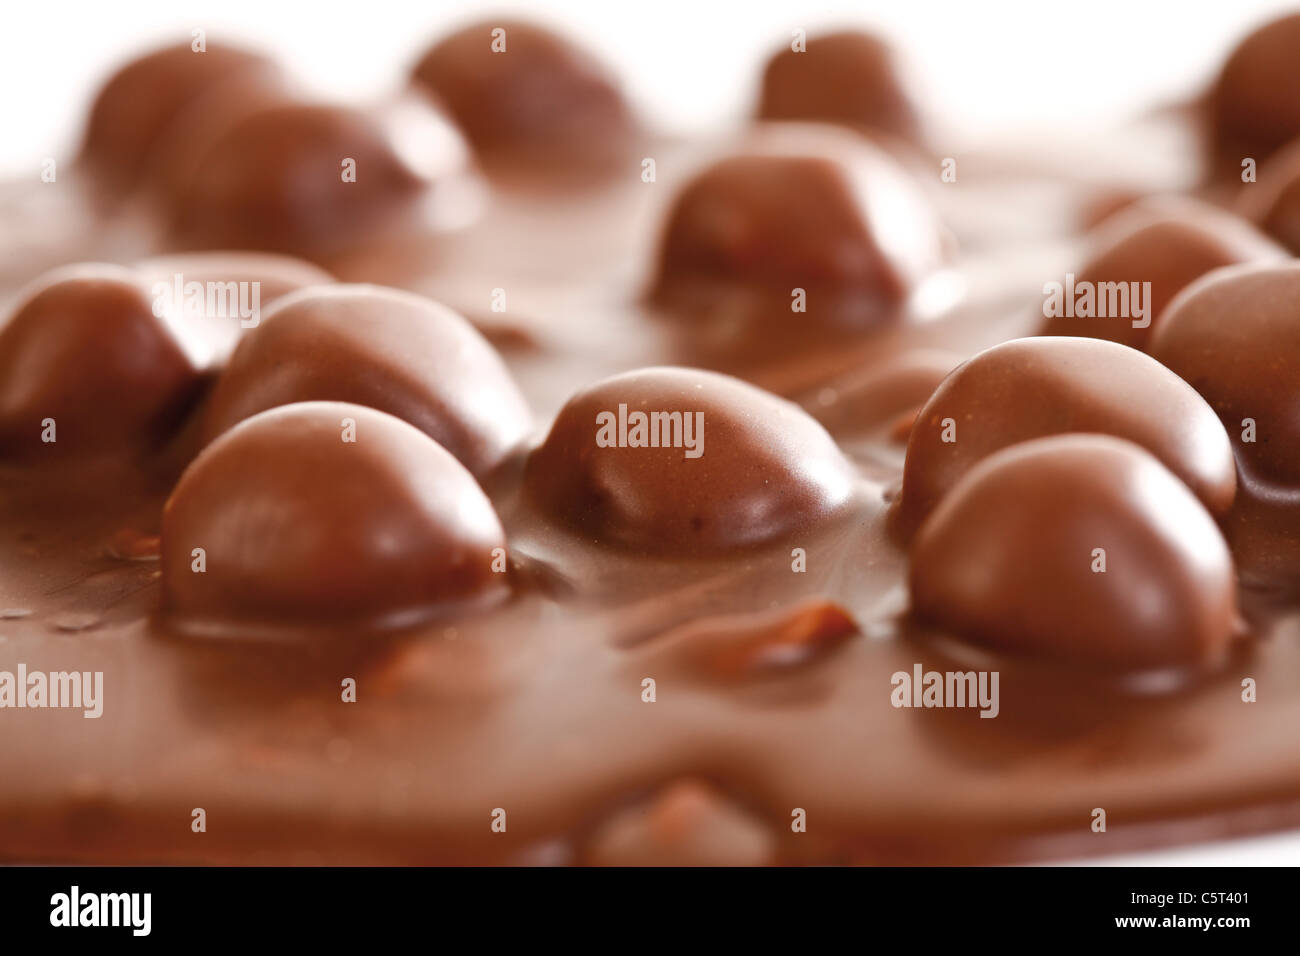 Chocolate with hazelnuts, close-up Stock Photo